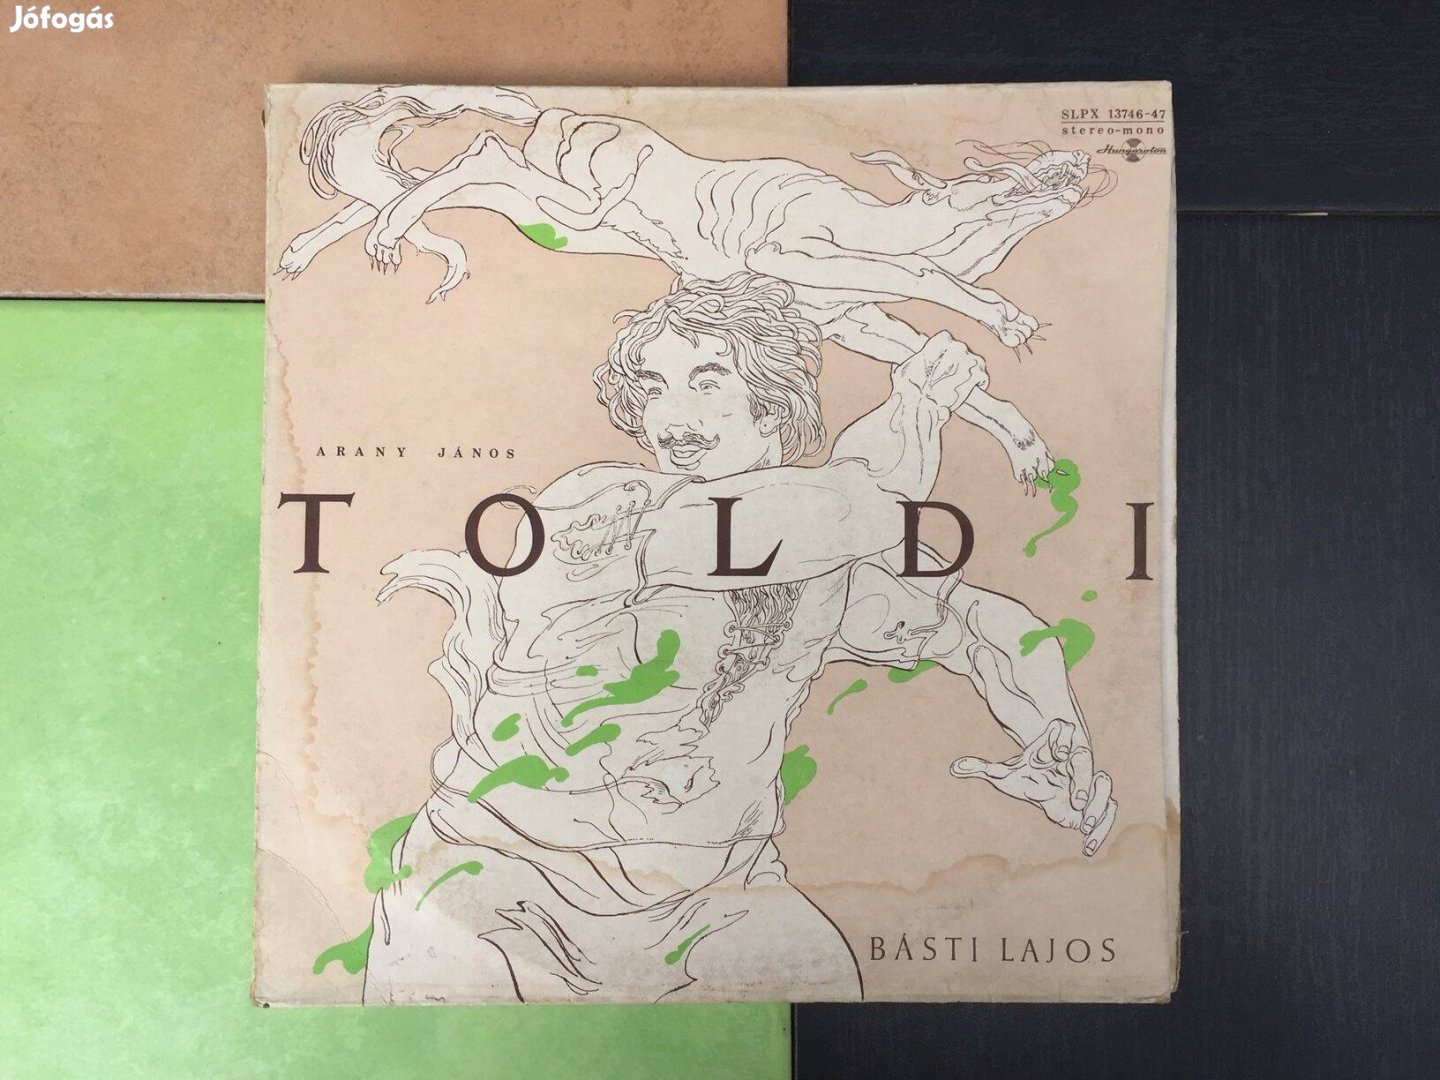 Arany János - Toldi - Básti Lajos - dupla album